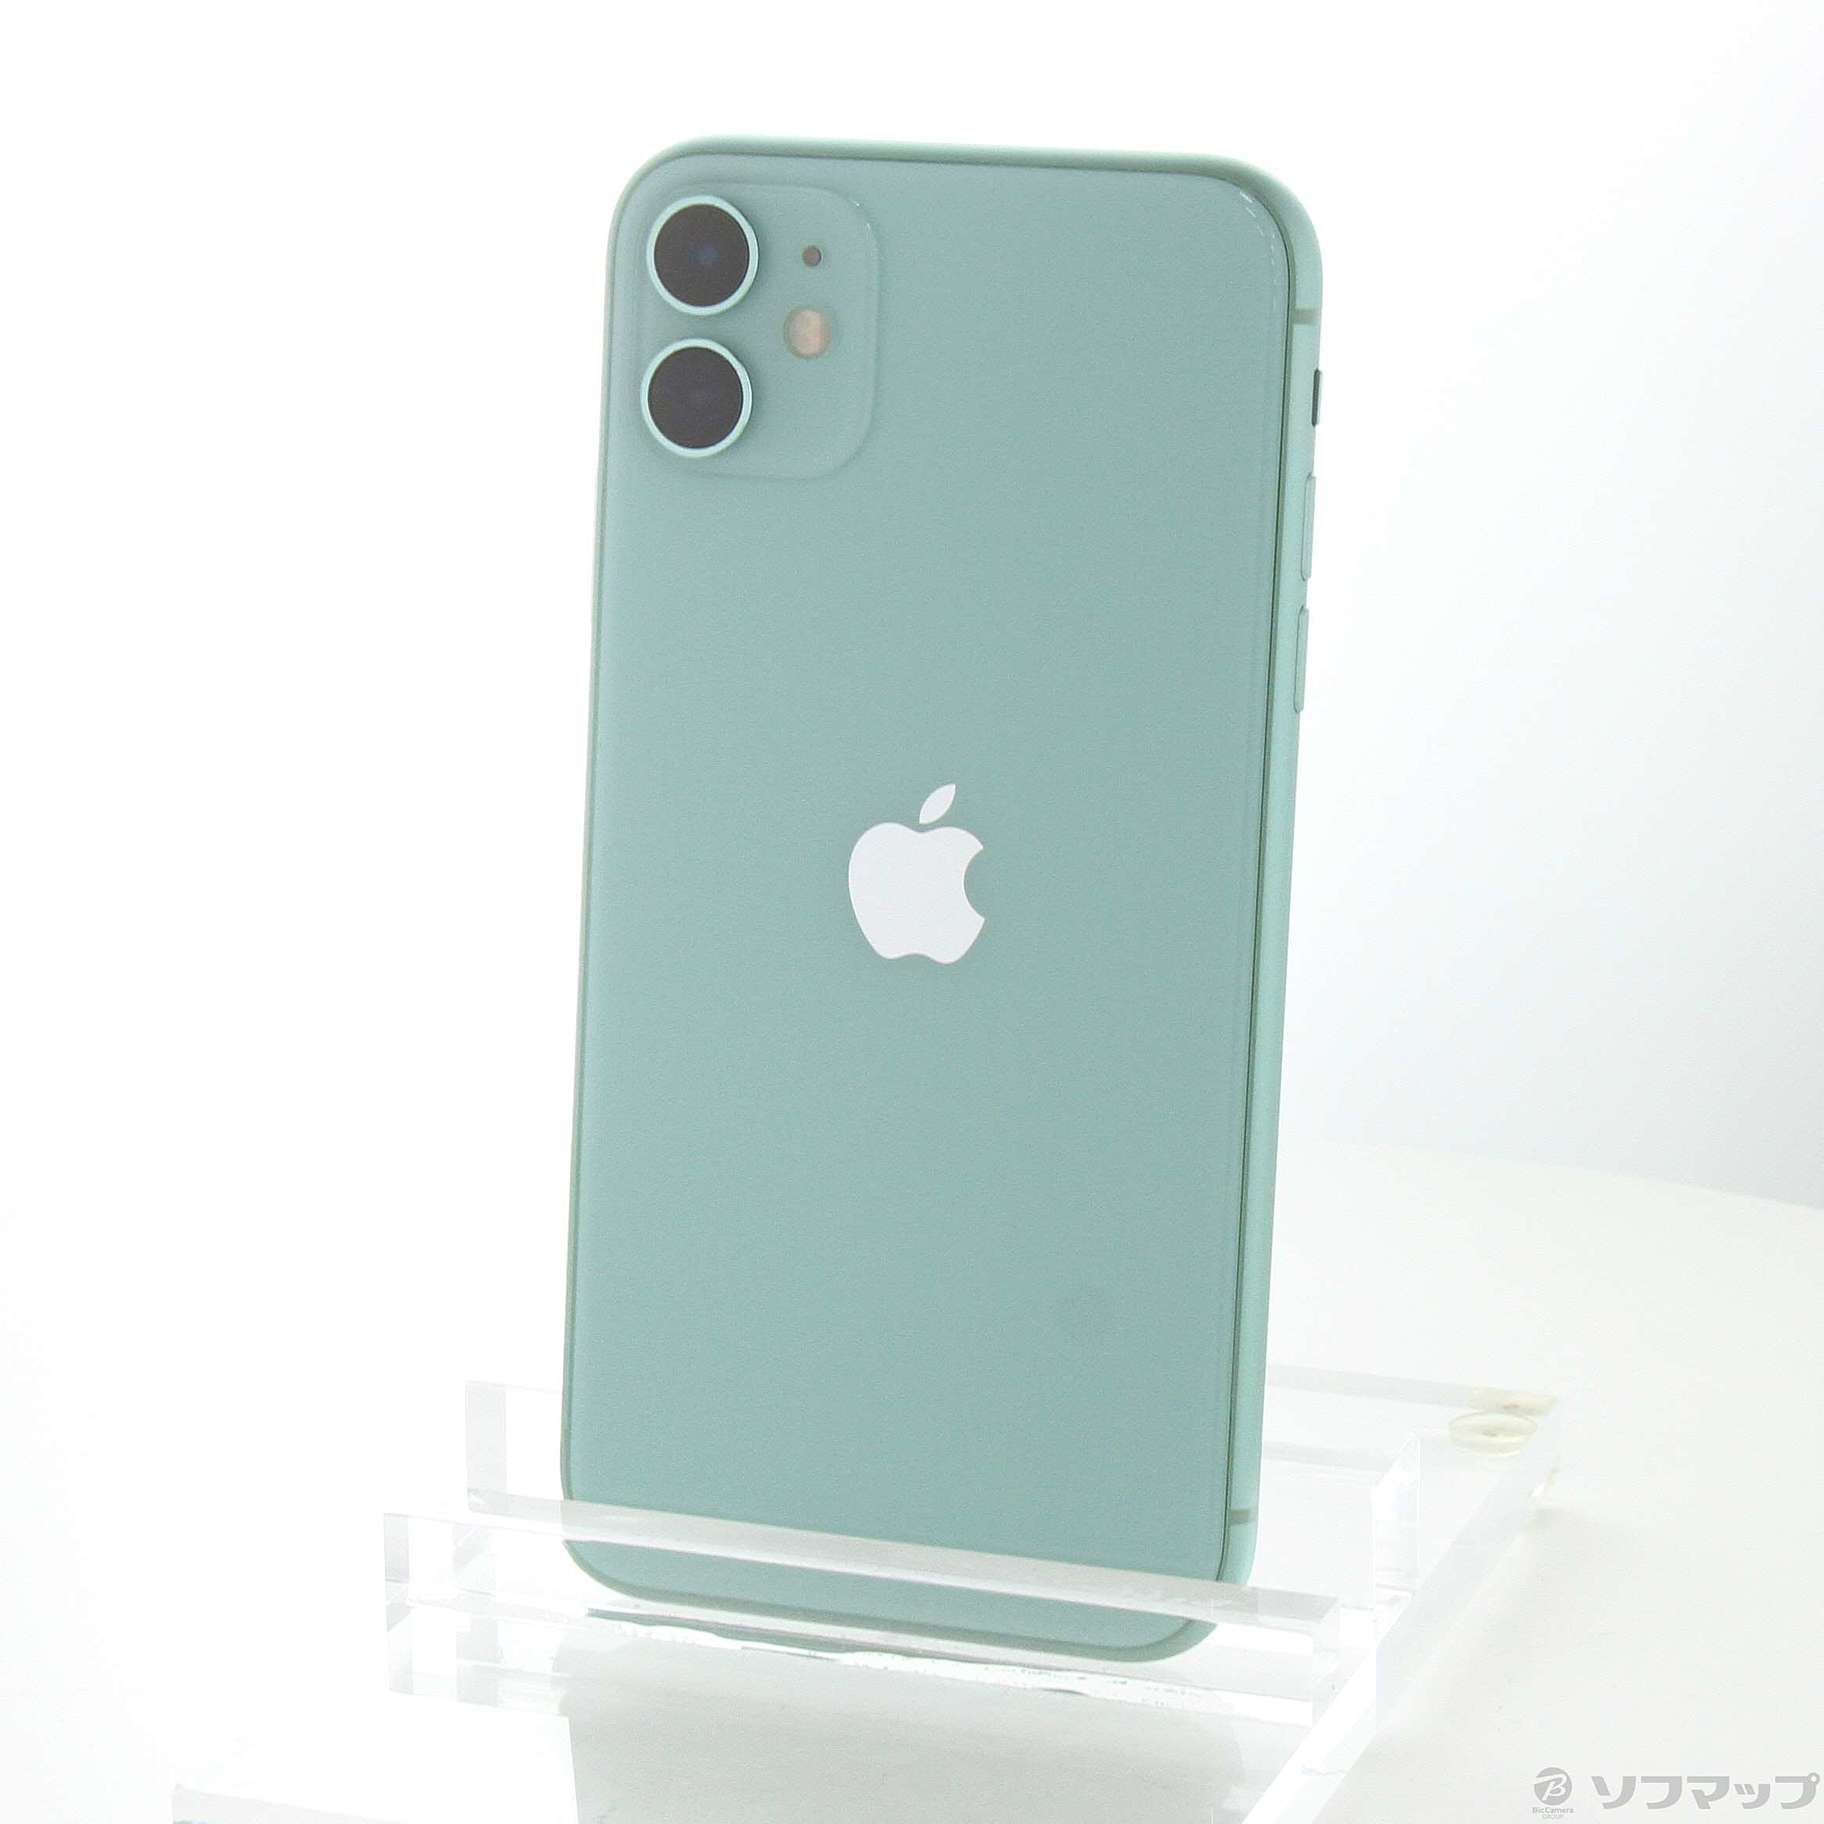 【新品・未開封】iPhone11 64GB Green SIMフリー